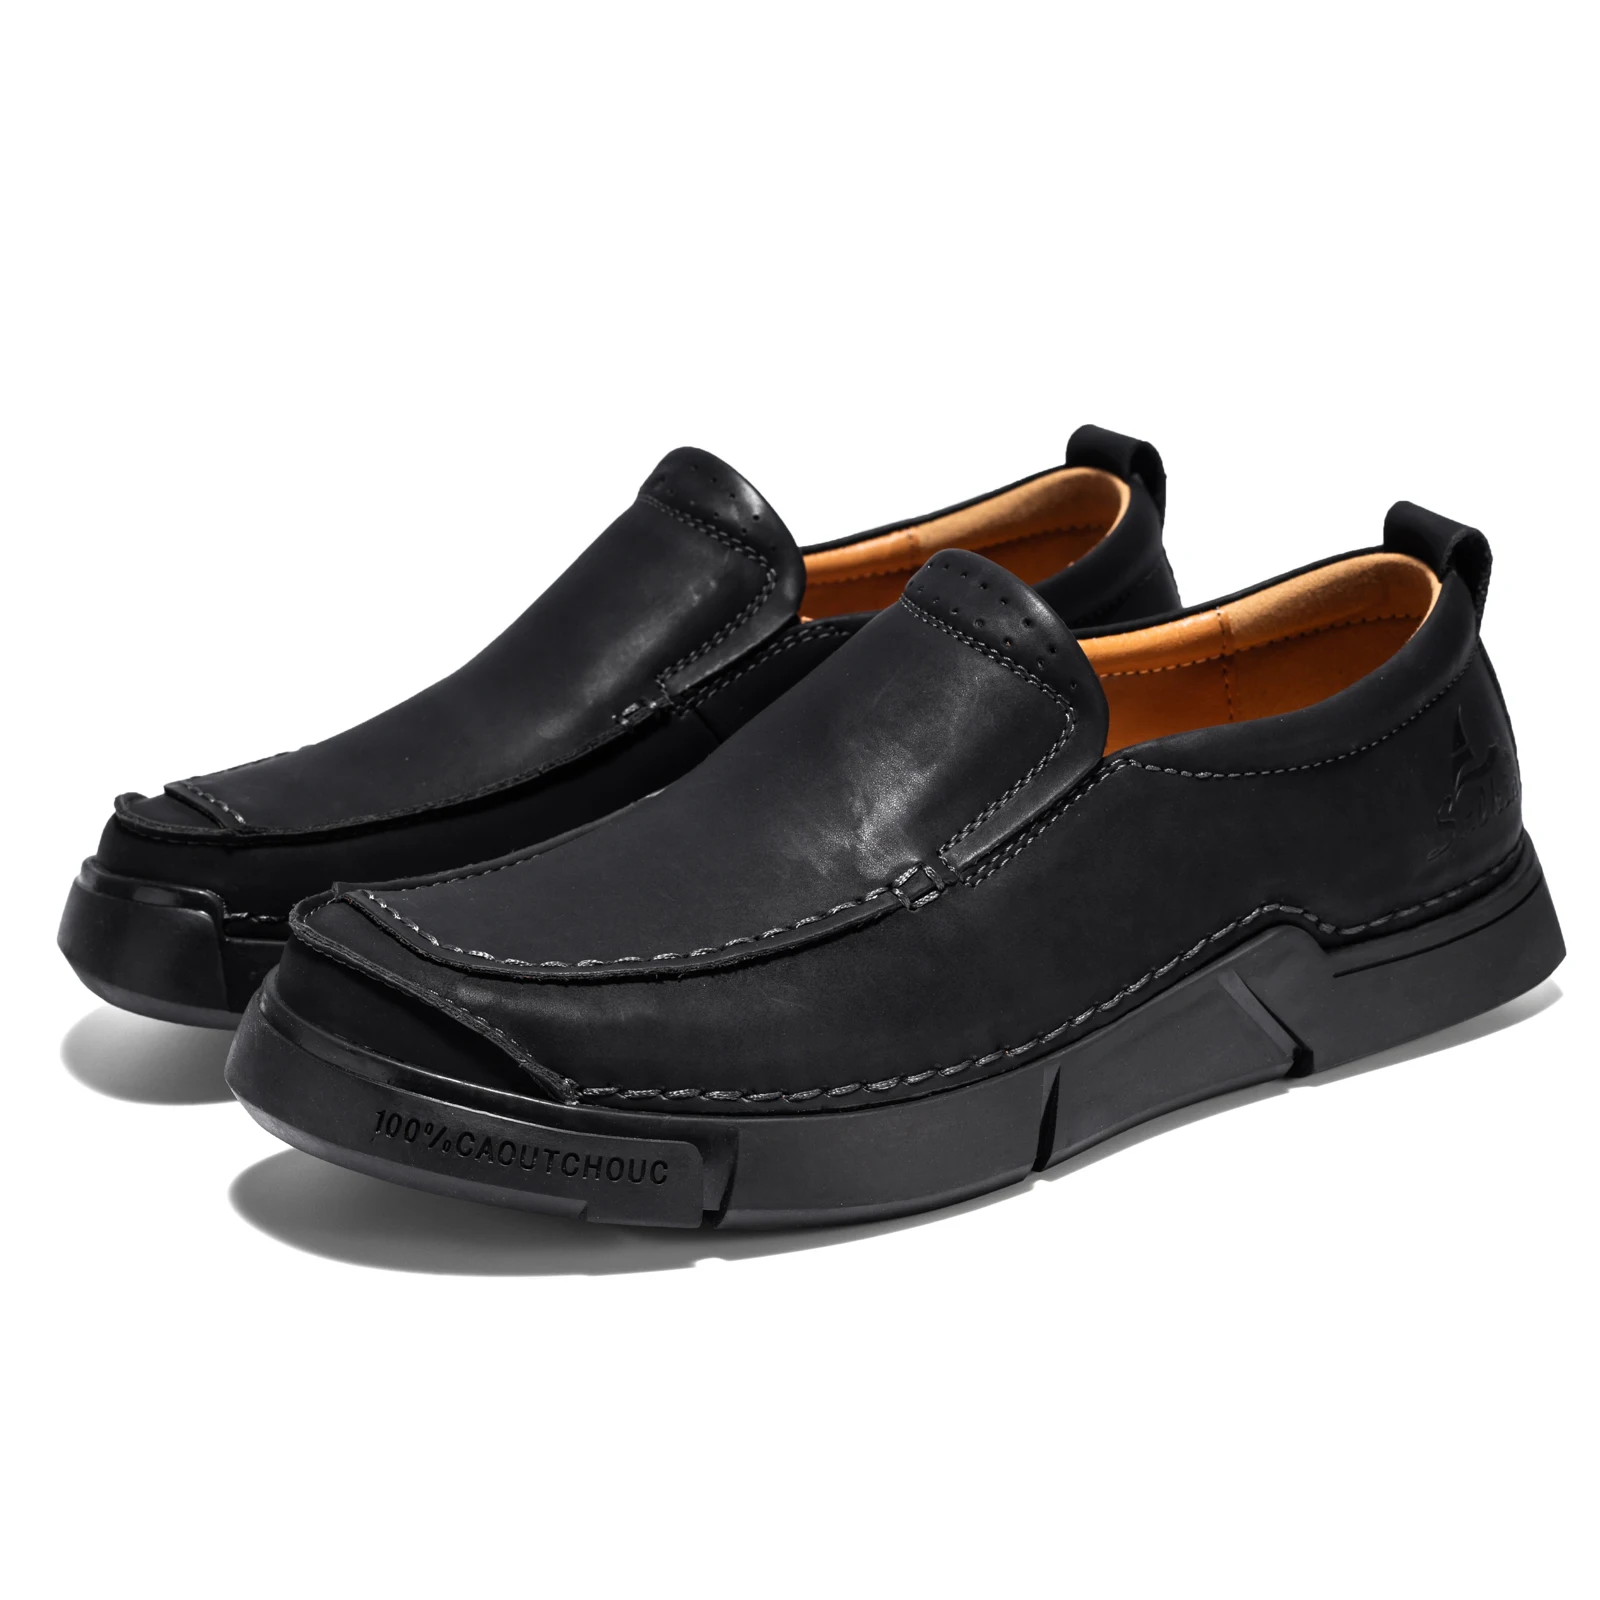 R shoes men sneakers outdoor leather men shoes breathable flats shoe hot sale moccasins thumb200